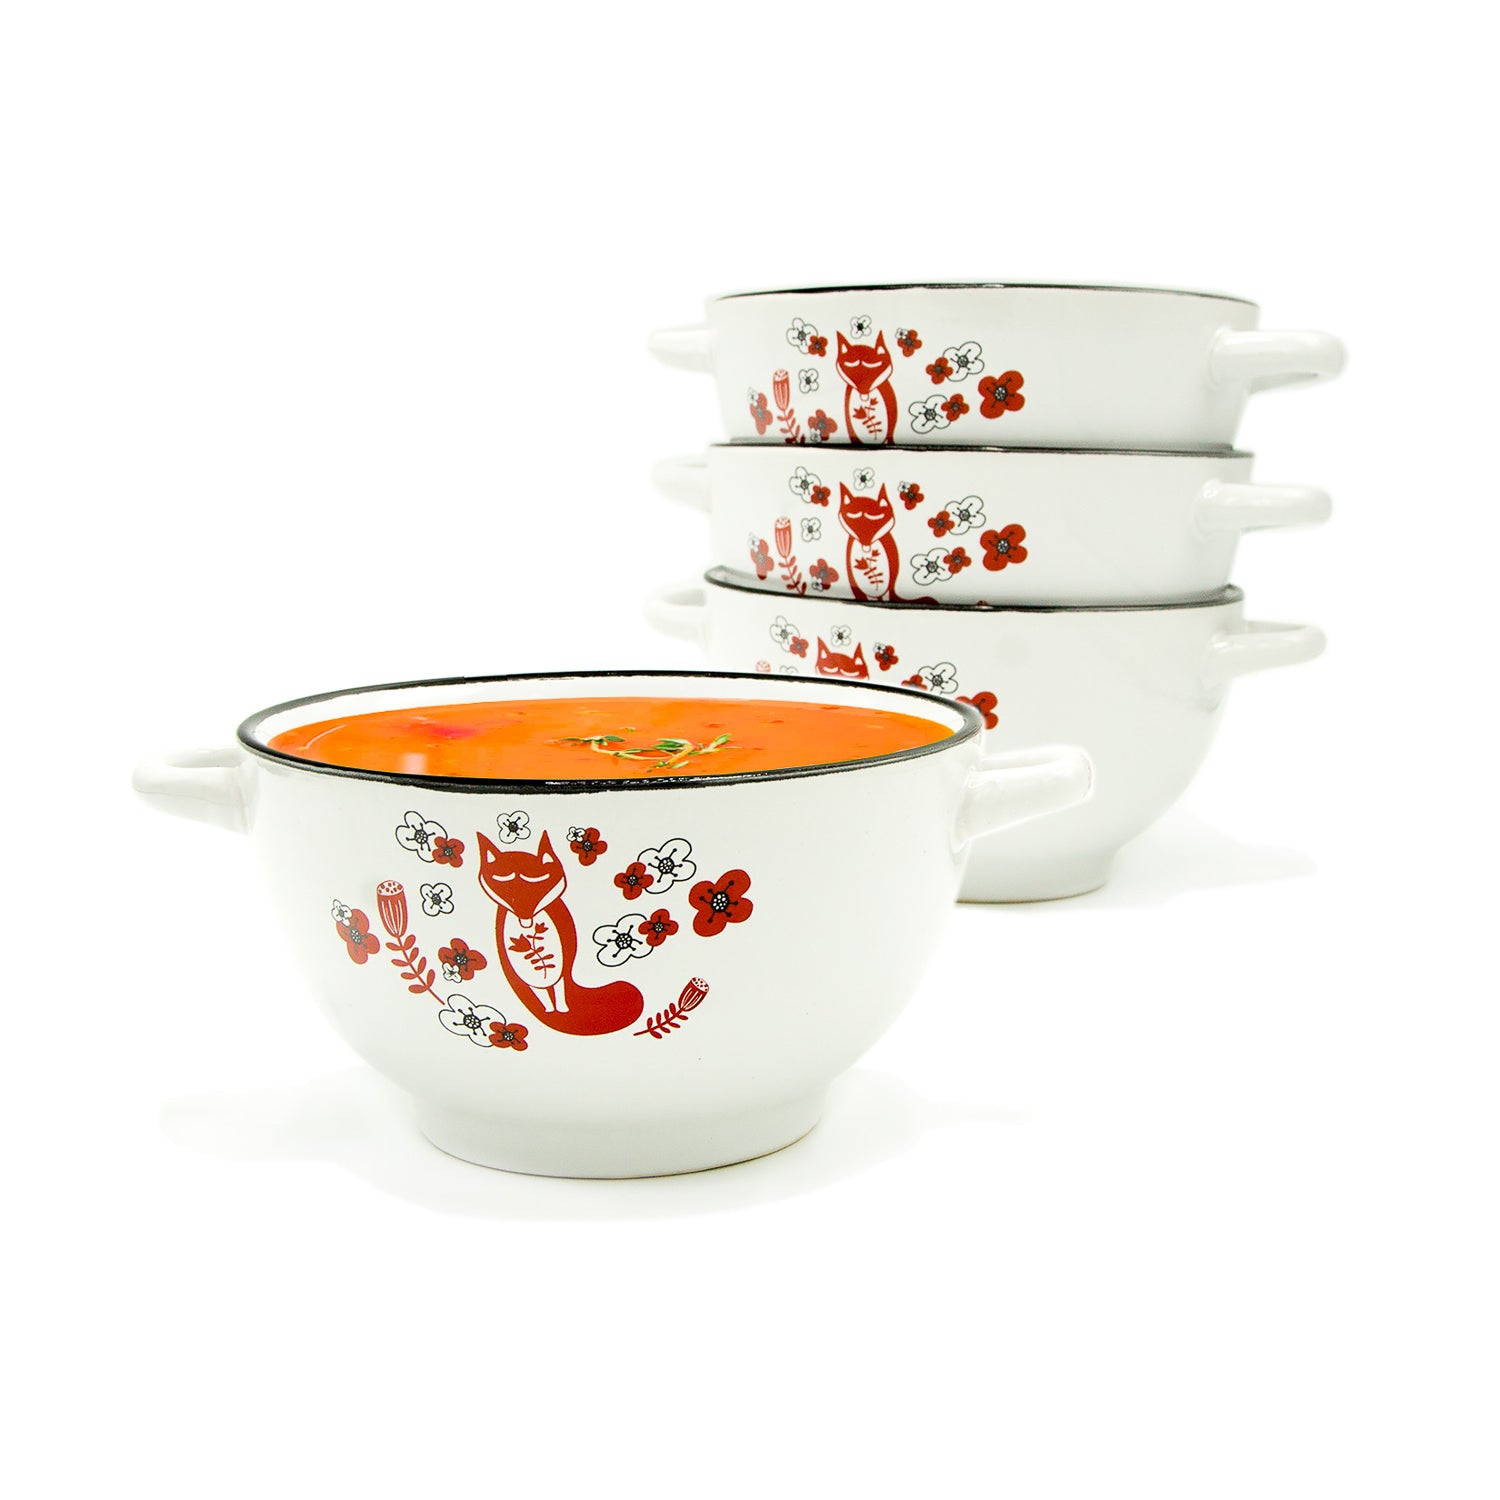 Bake & Serve - Large Ceramic Soup Bowls With Handles - 30 Ounce - Set -  ecodesign-us